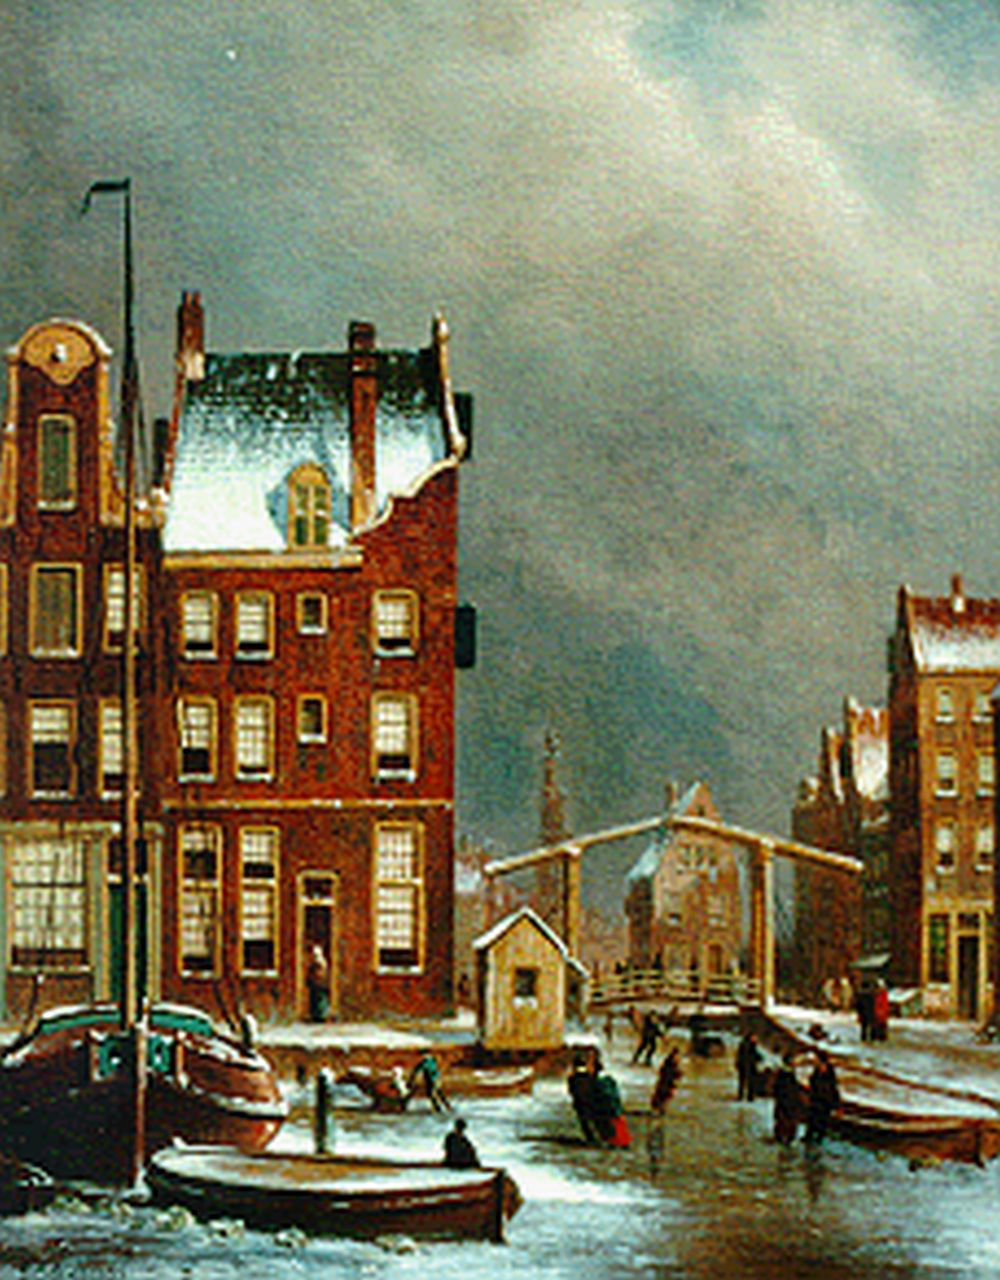 Jongh O.R. de | Oene Romkes de Jongh, View of the Groenburgwal, Amsterdam, oil on canvas 67.0 x 54.0 cm, signed l.l.